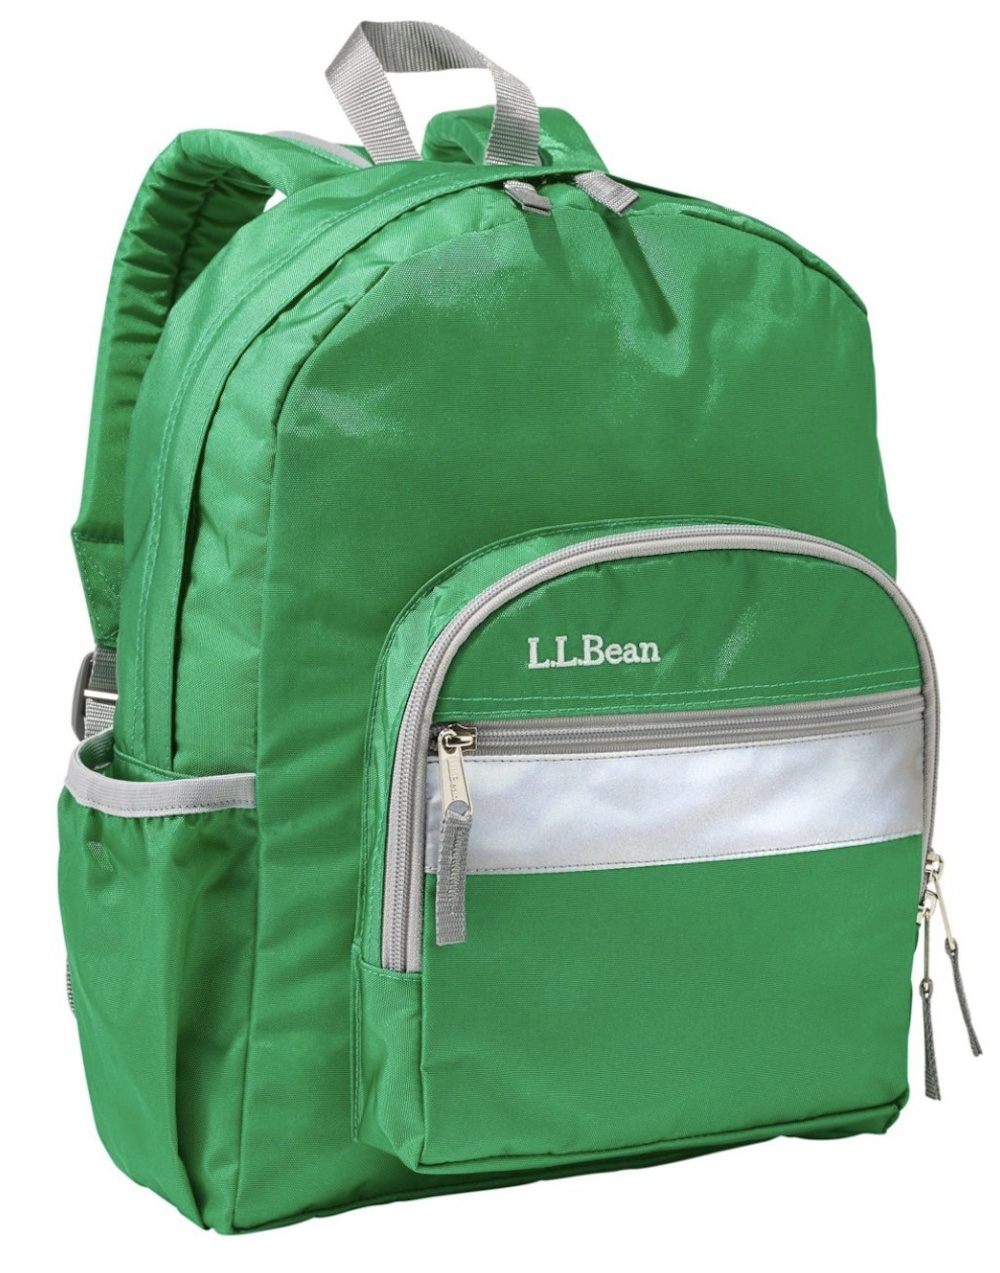 LL Bean backpack